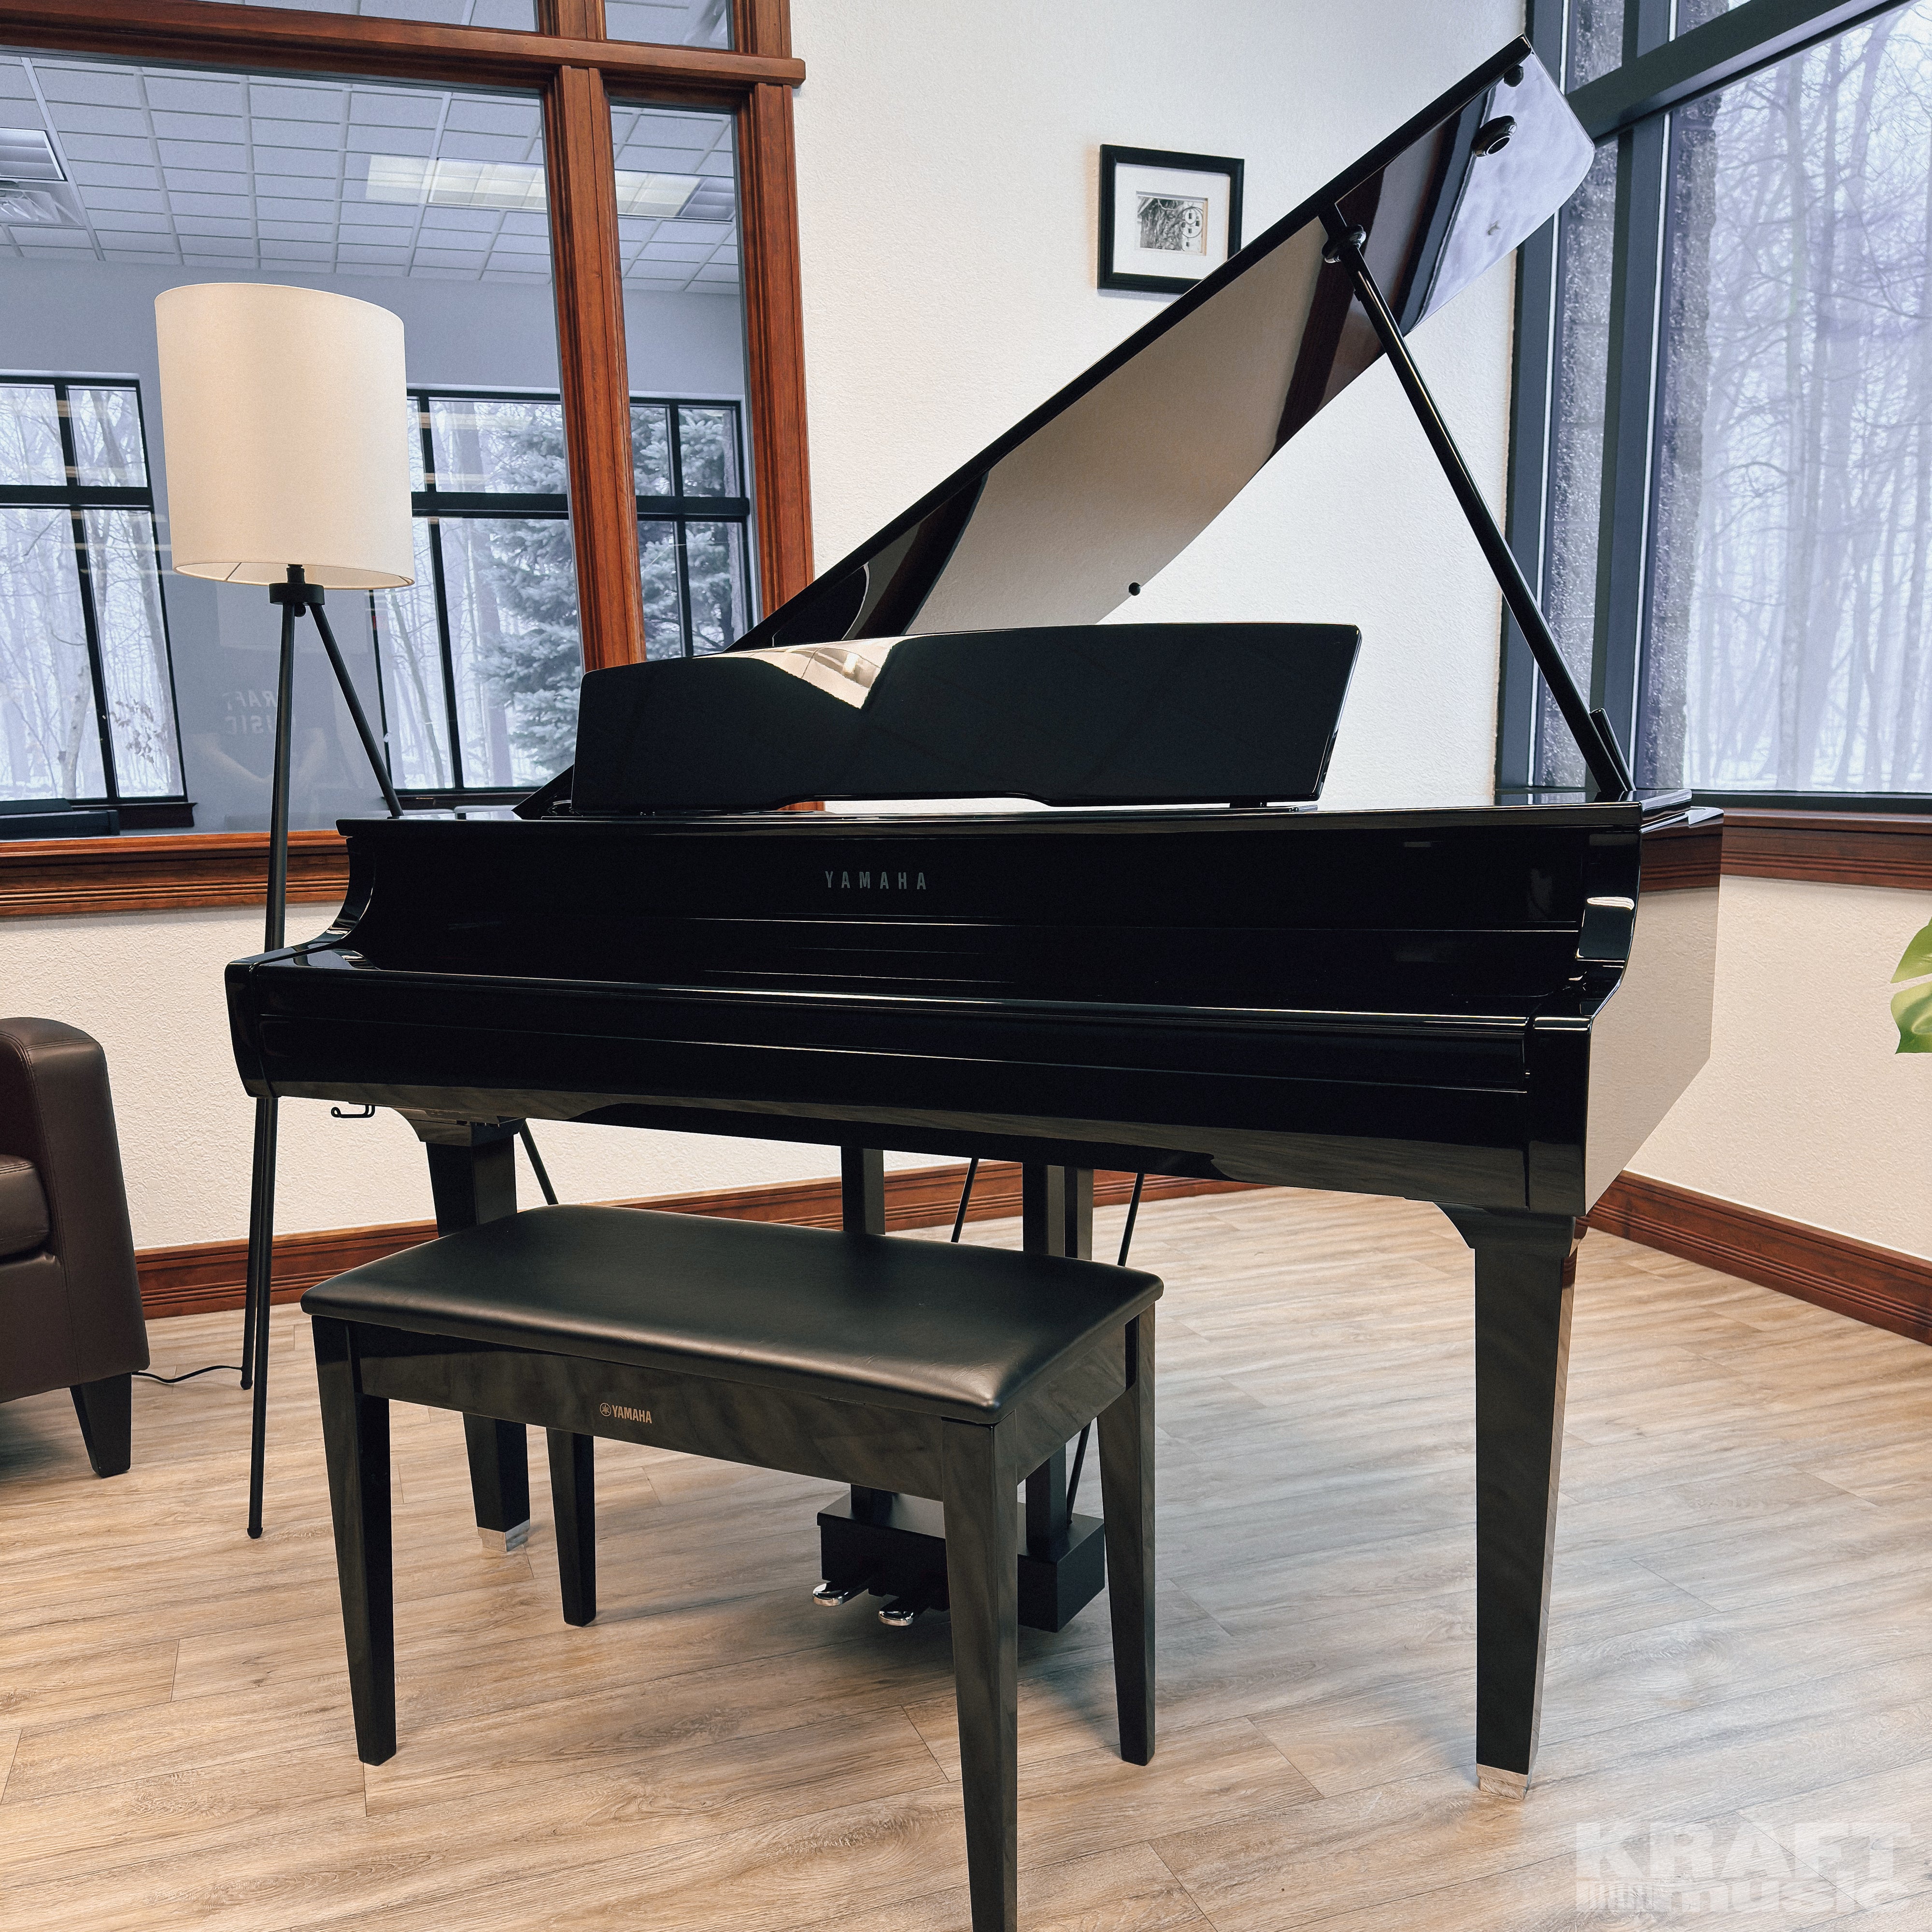 Yamaha Clavinova CSP-295GP Digital Grand Piano - Polished Ebony - in a stylish music room with the key cover closed